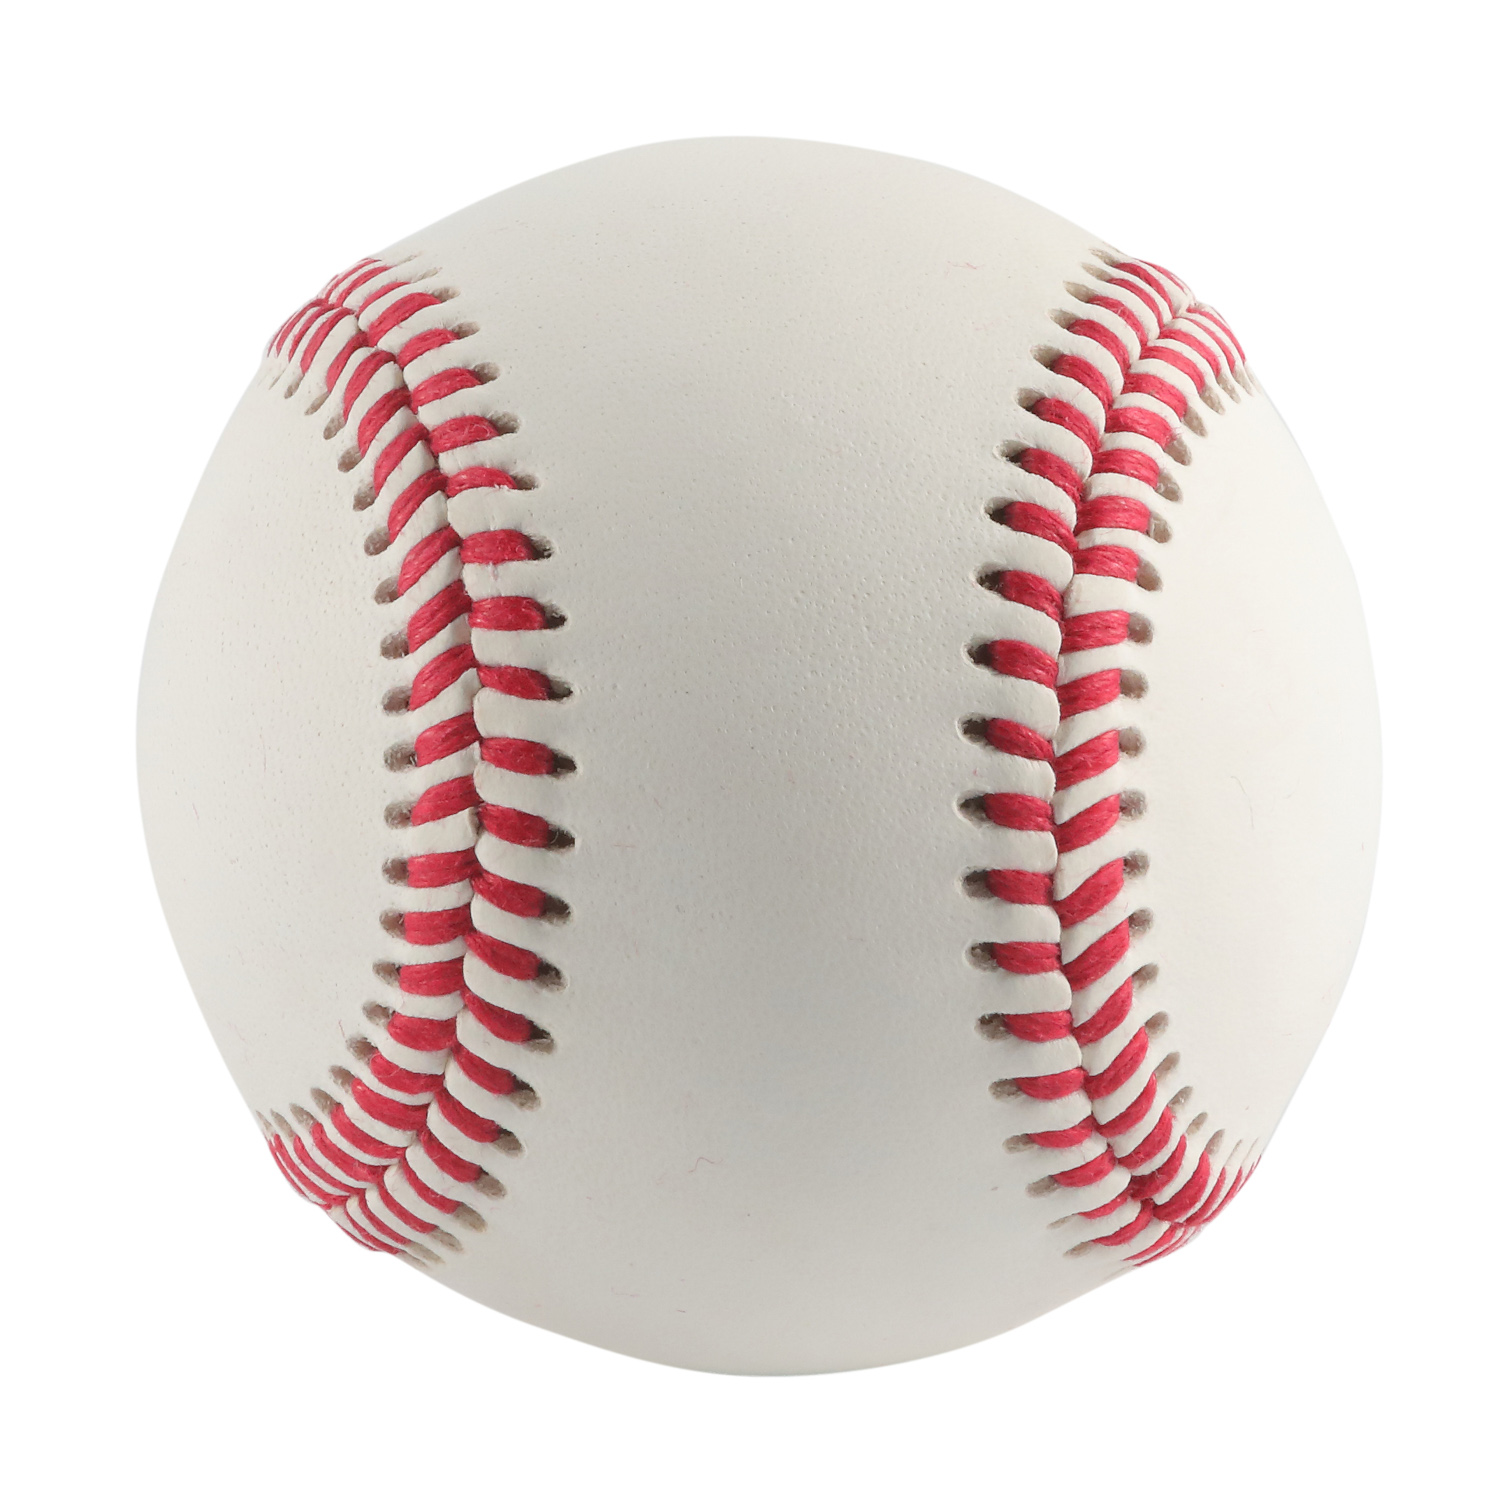 Großhandel aus Vollnarbenleder, kundenspezifischer 9-Zoll-Übungs-/Trainings-Baseball